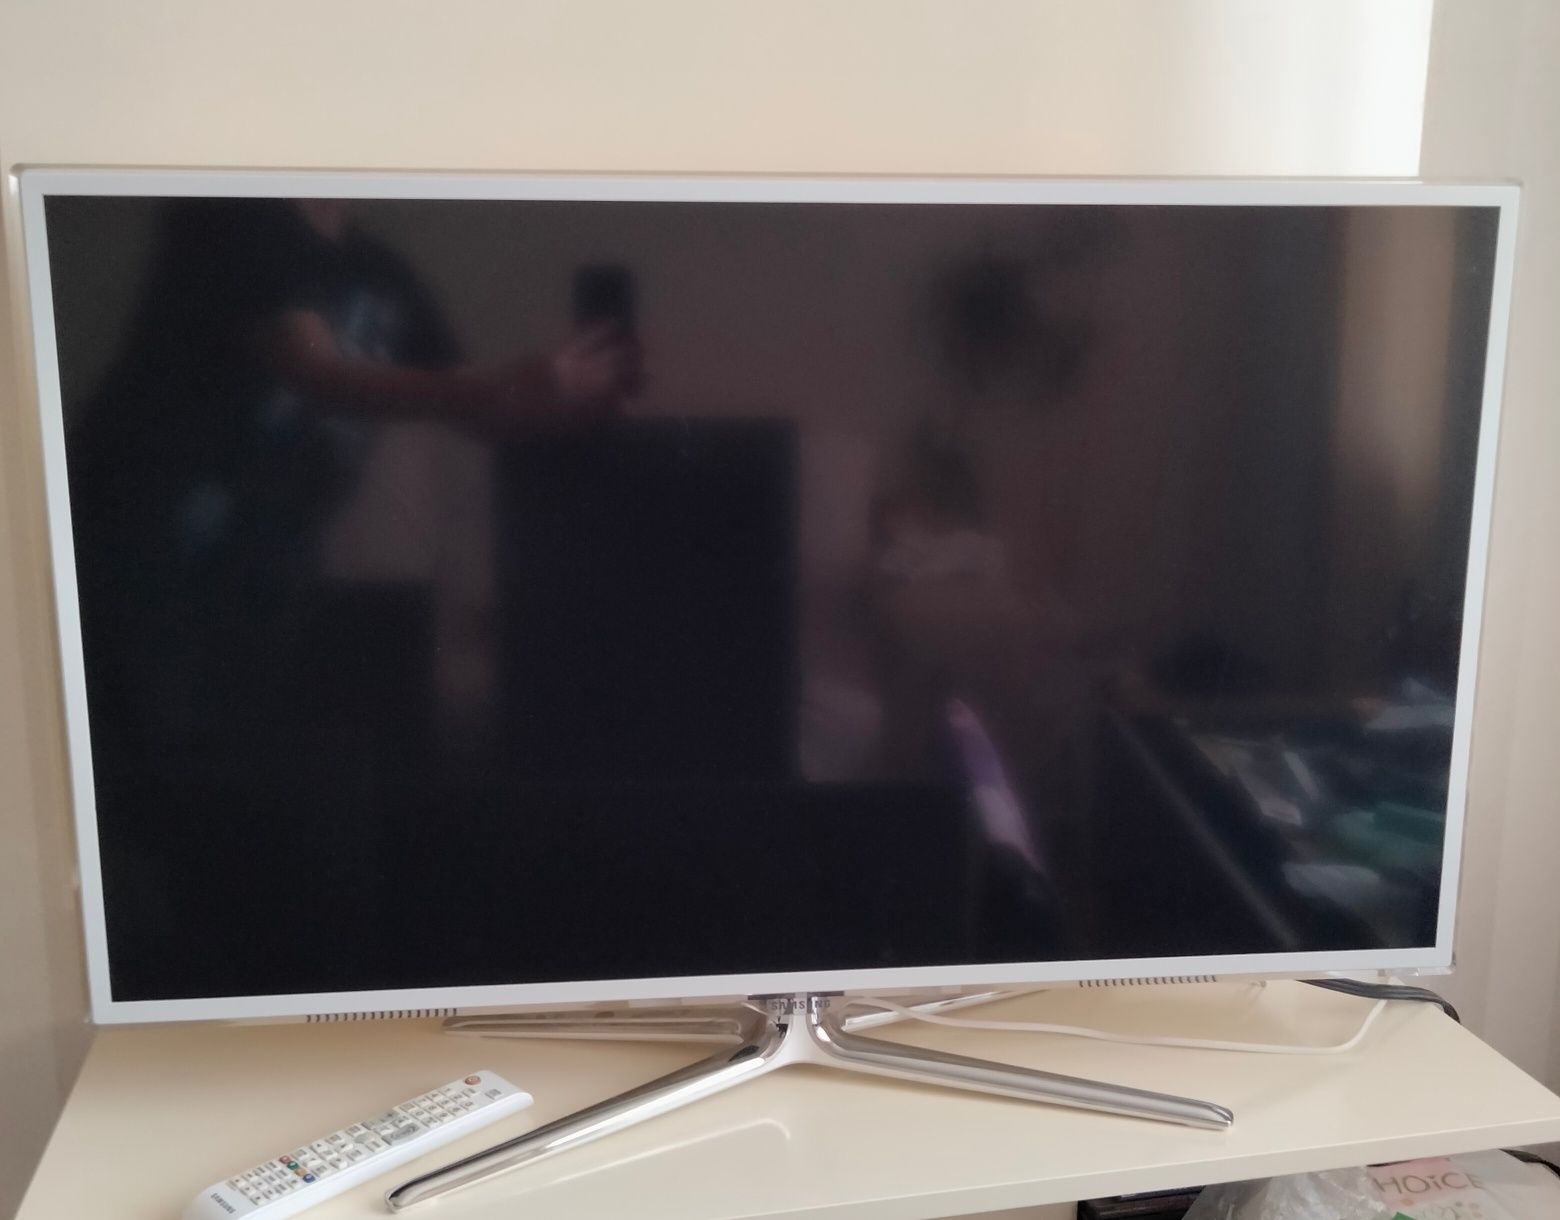 Samsung 40 Smart TV